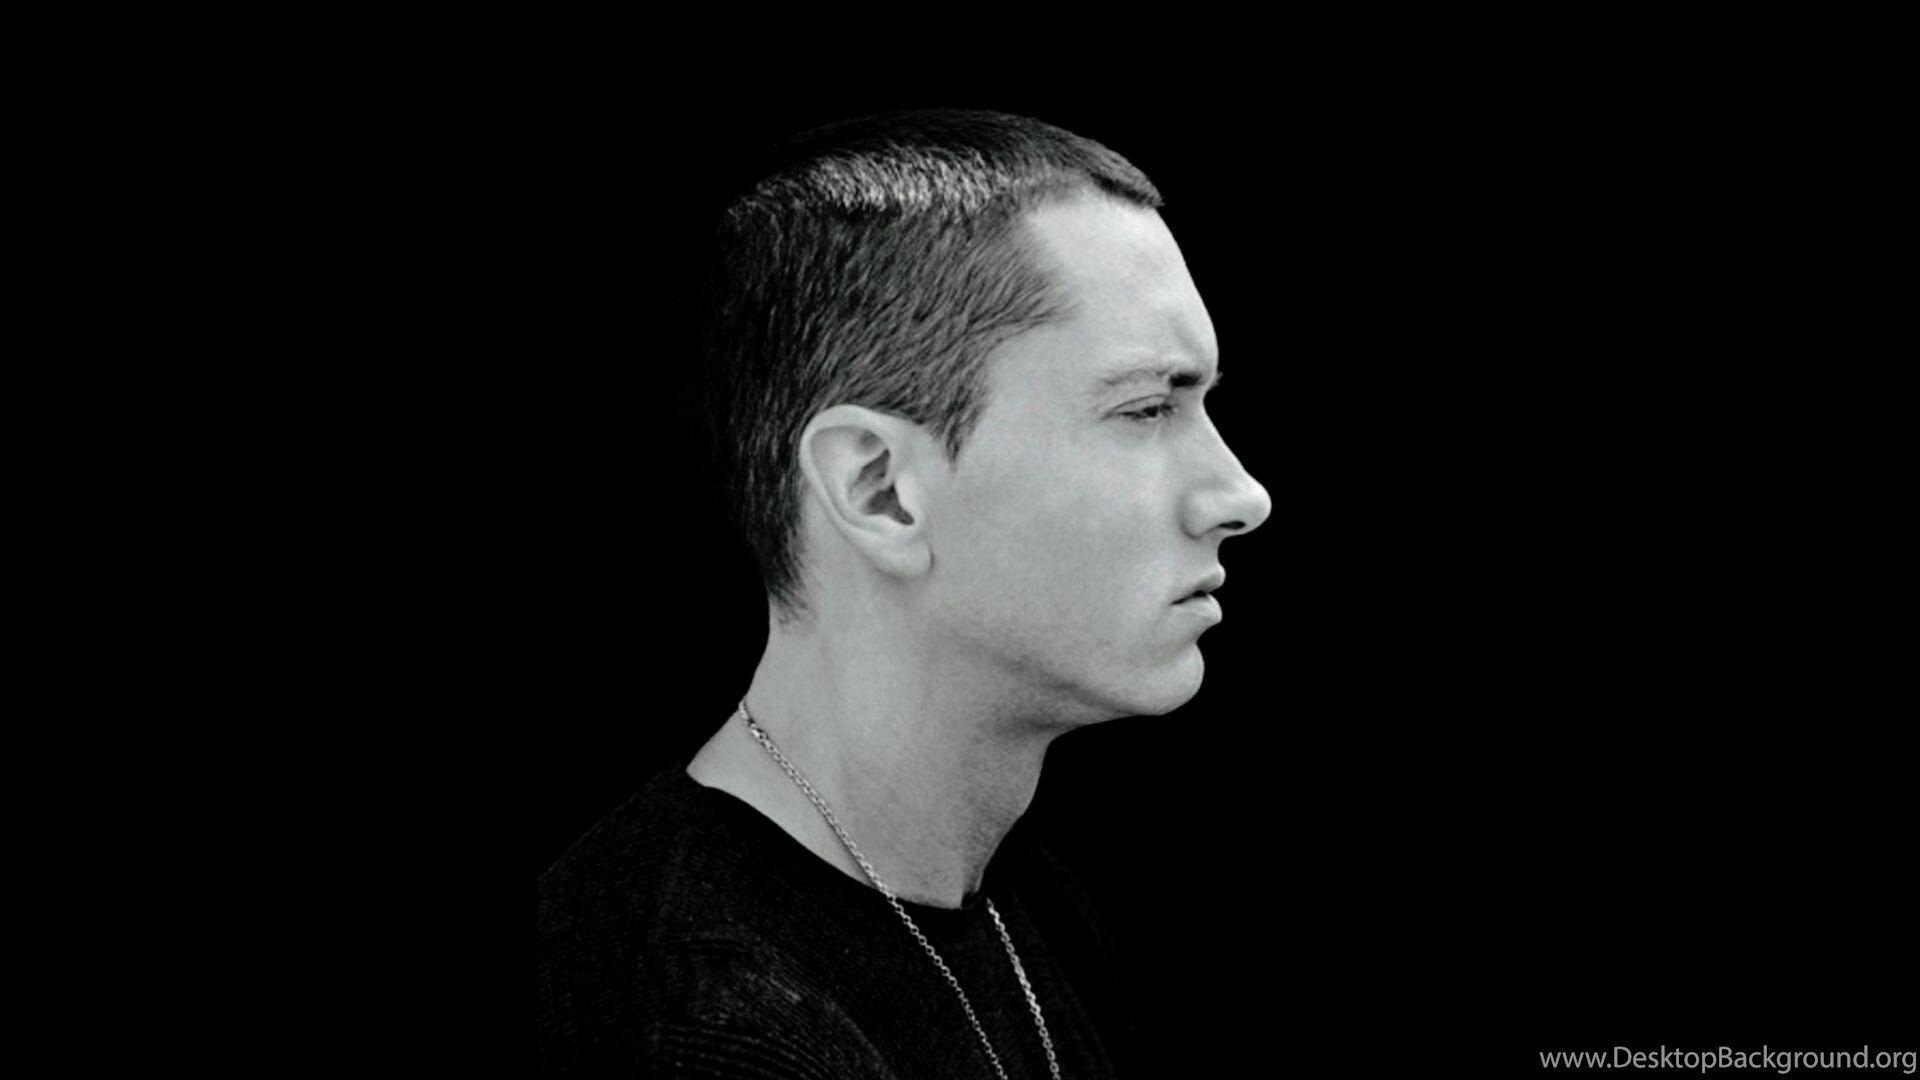 Eminem Not Afraid Wallpapers - Wallpaper Cave